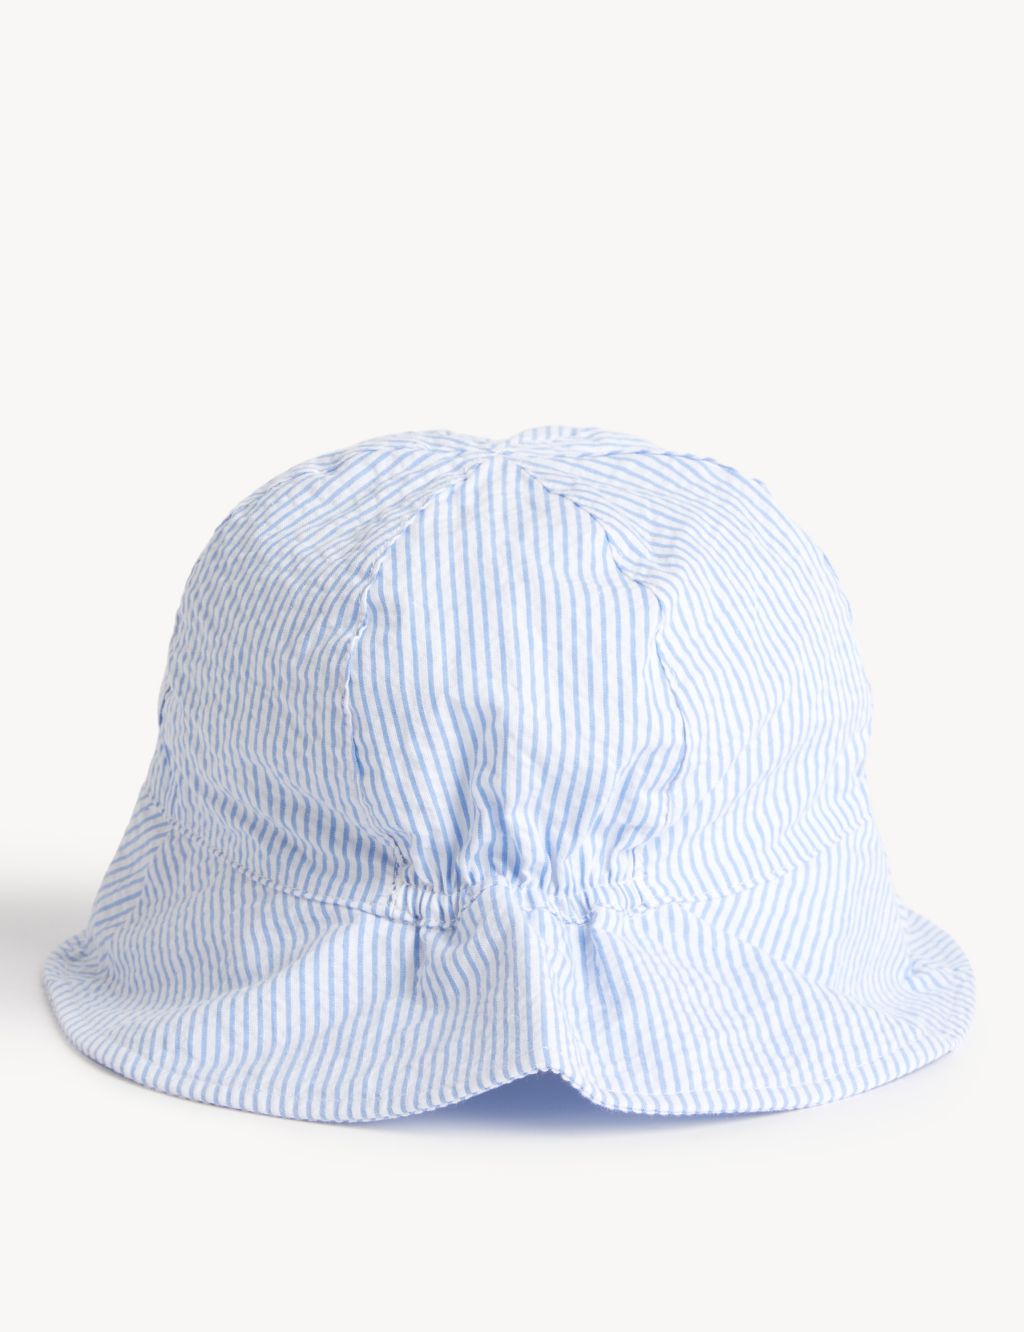 Kids' Pure Cotton Striped Sun Hat (0-6 Yrs) image 2